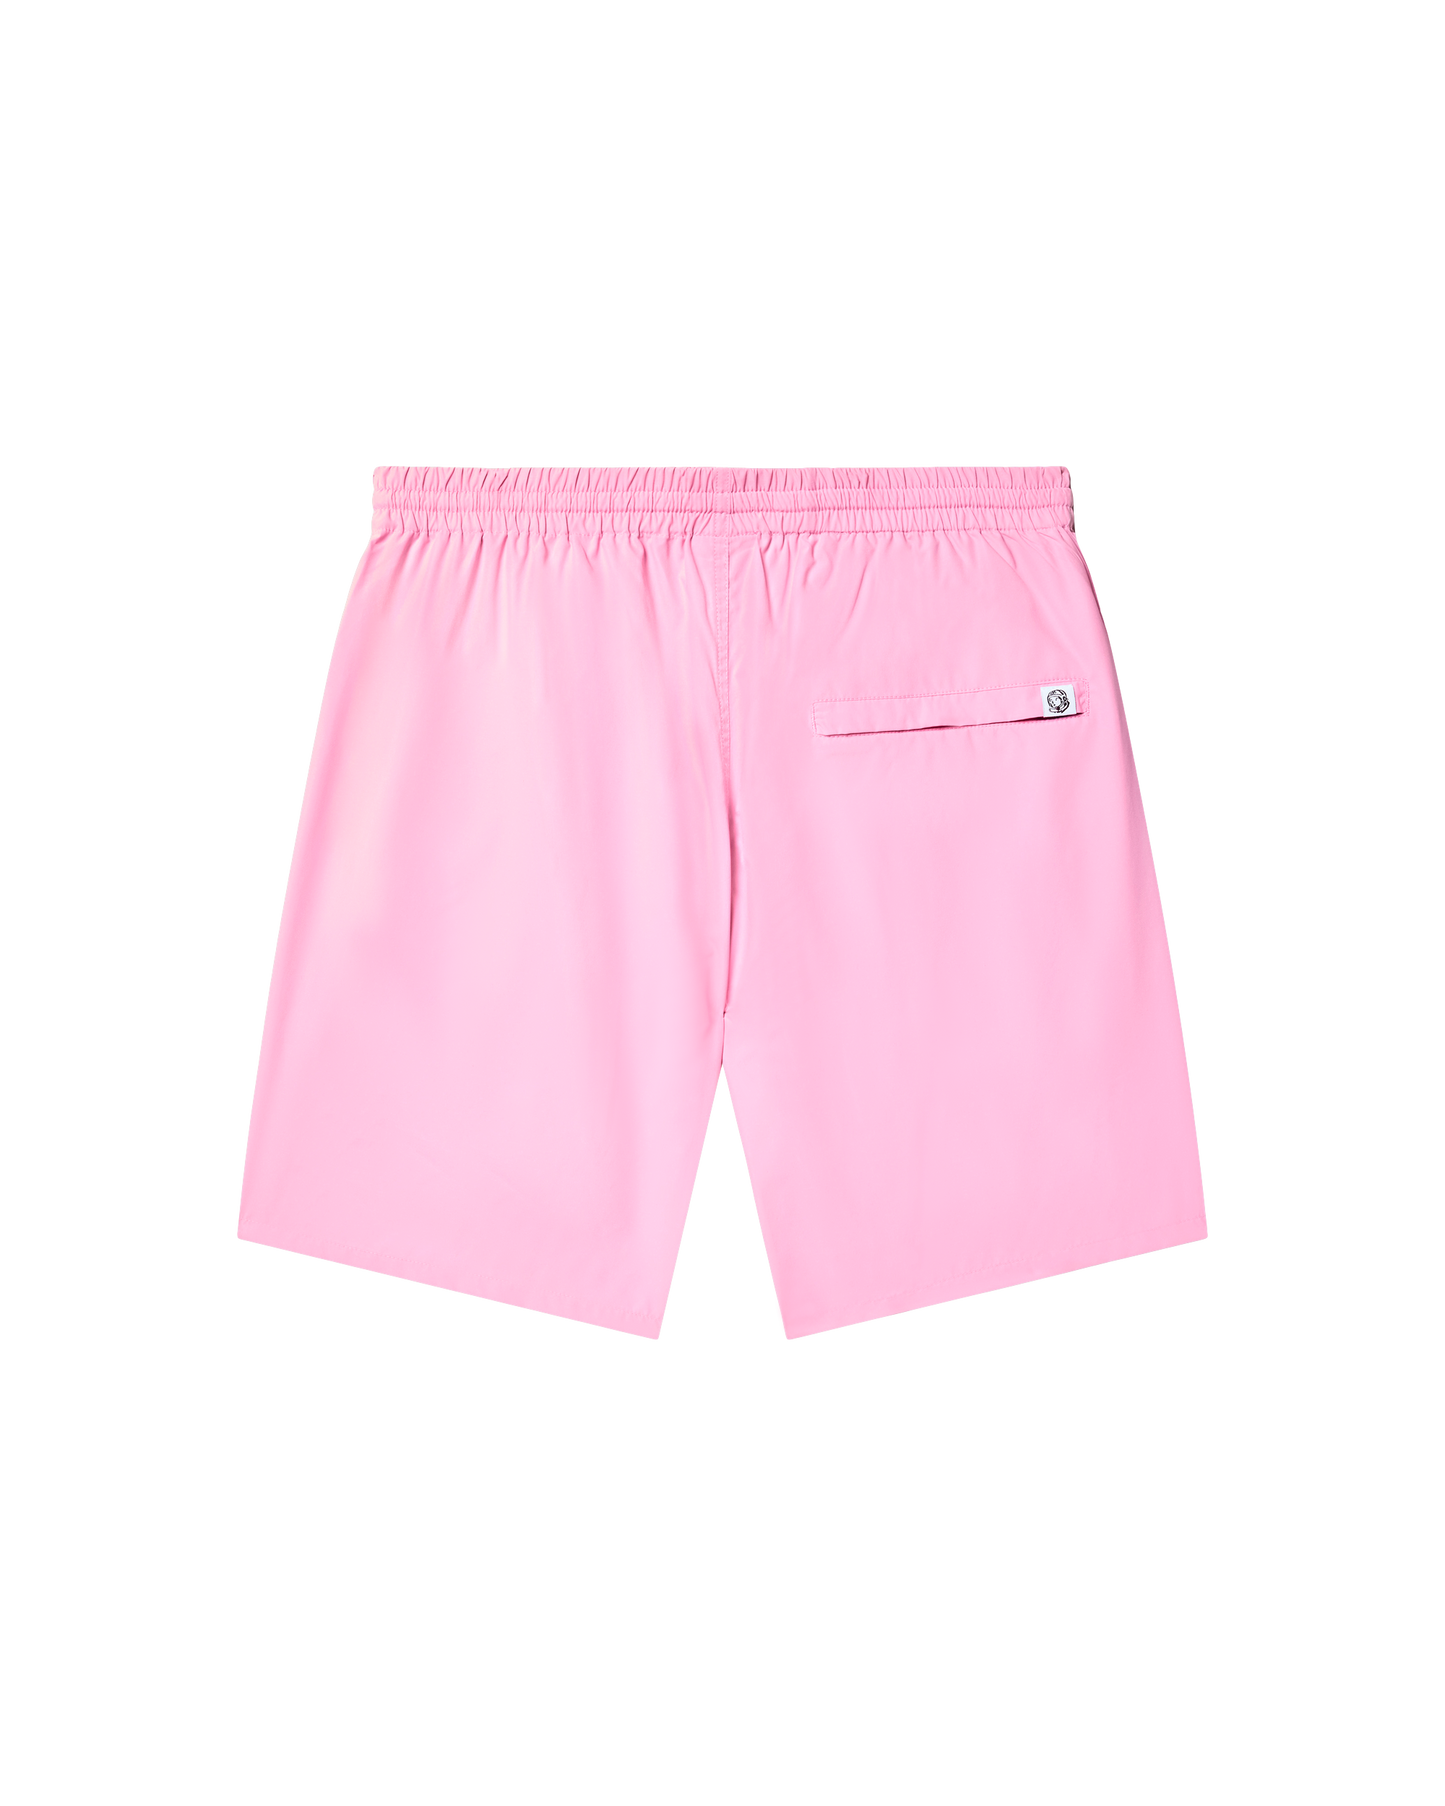 Mercer Shorts